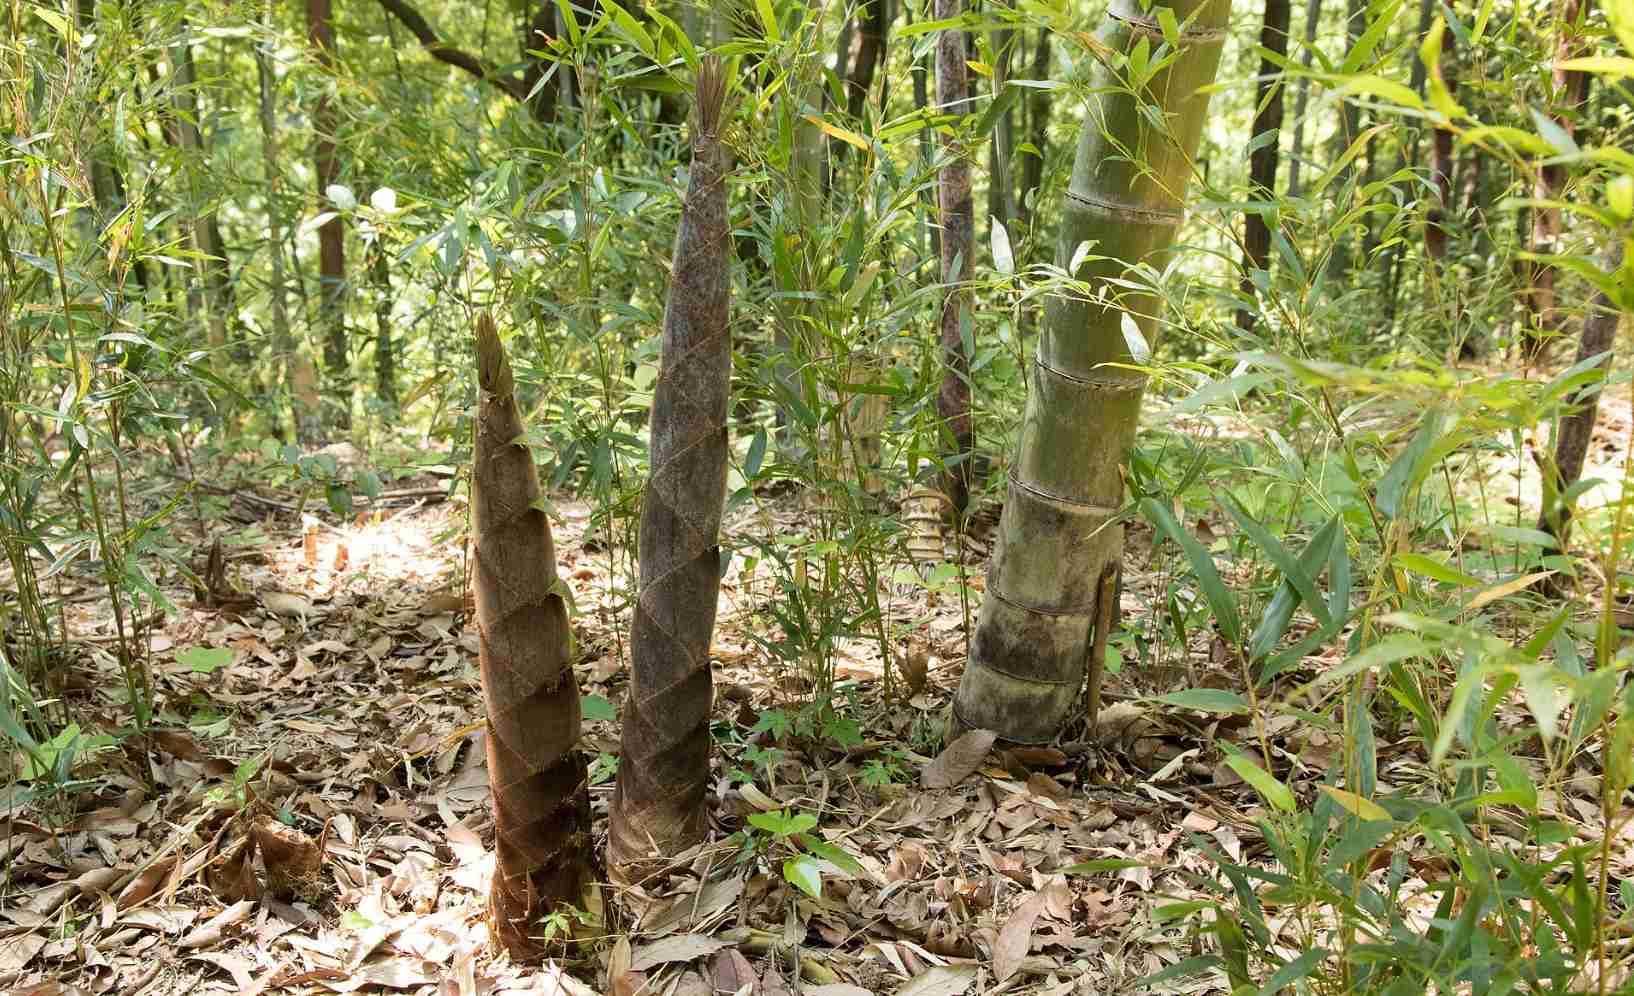 Moso bamboo propagating shoots